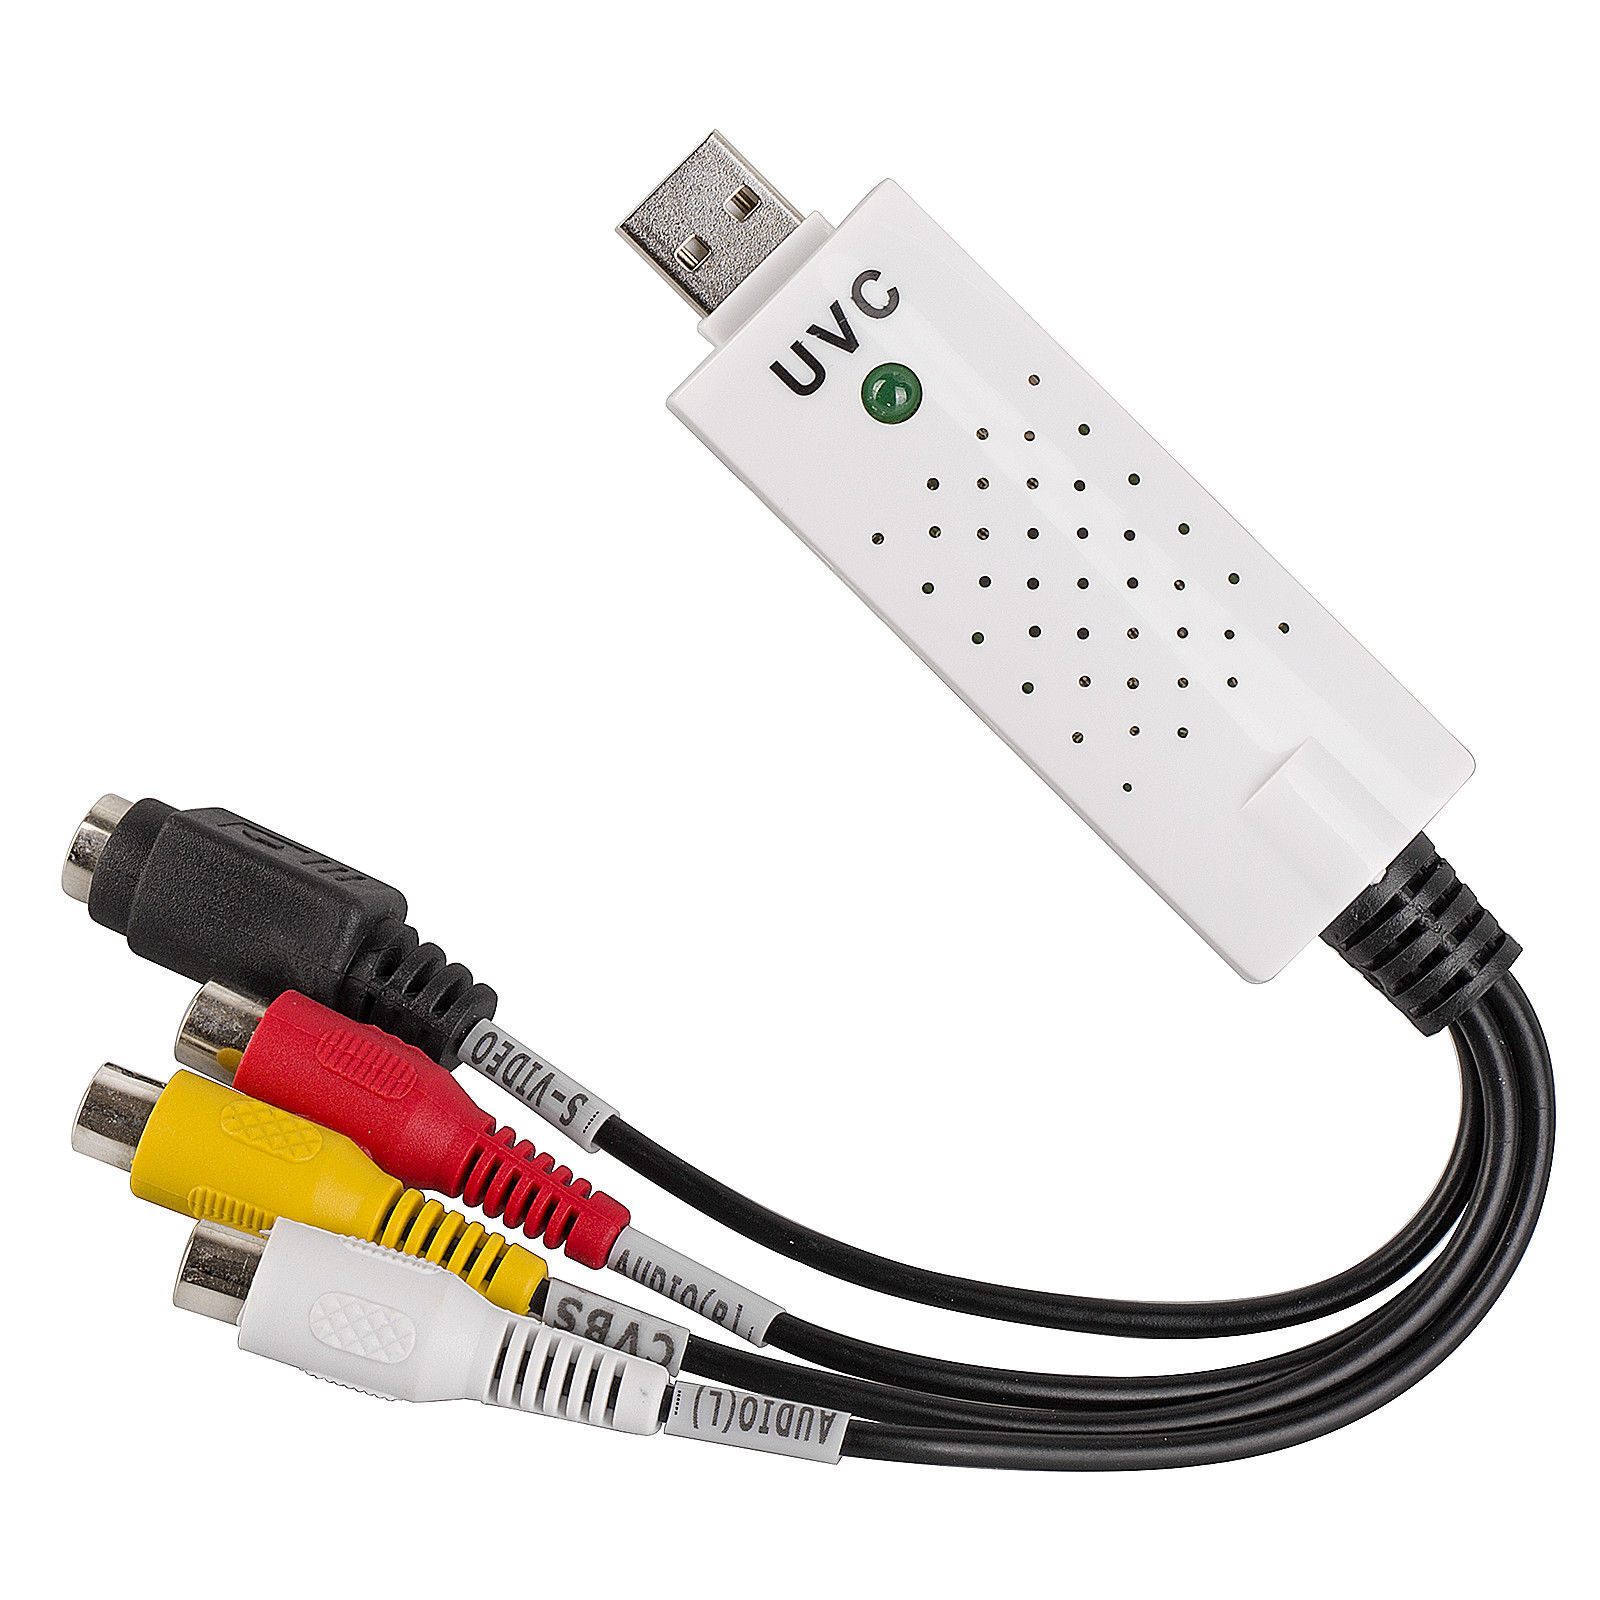 USB Video Audio Capture Card Adapter RCA Analog S-Video AV Input to Computer PC